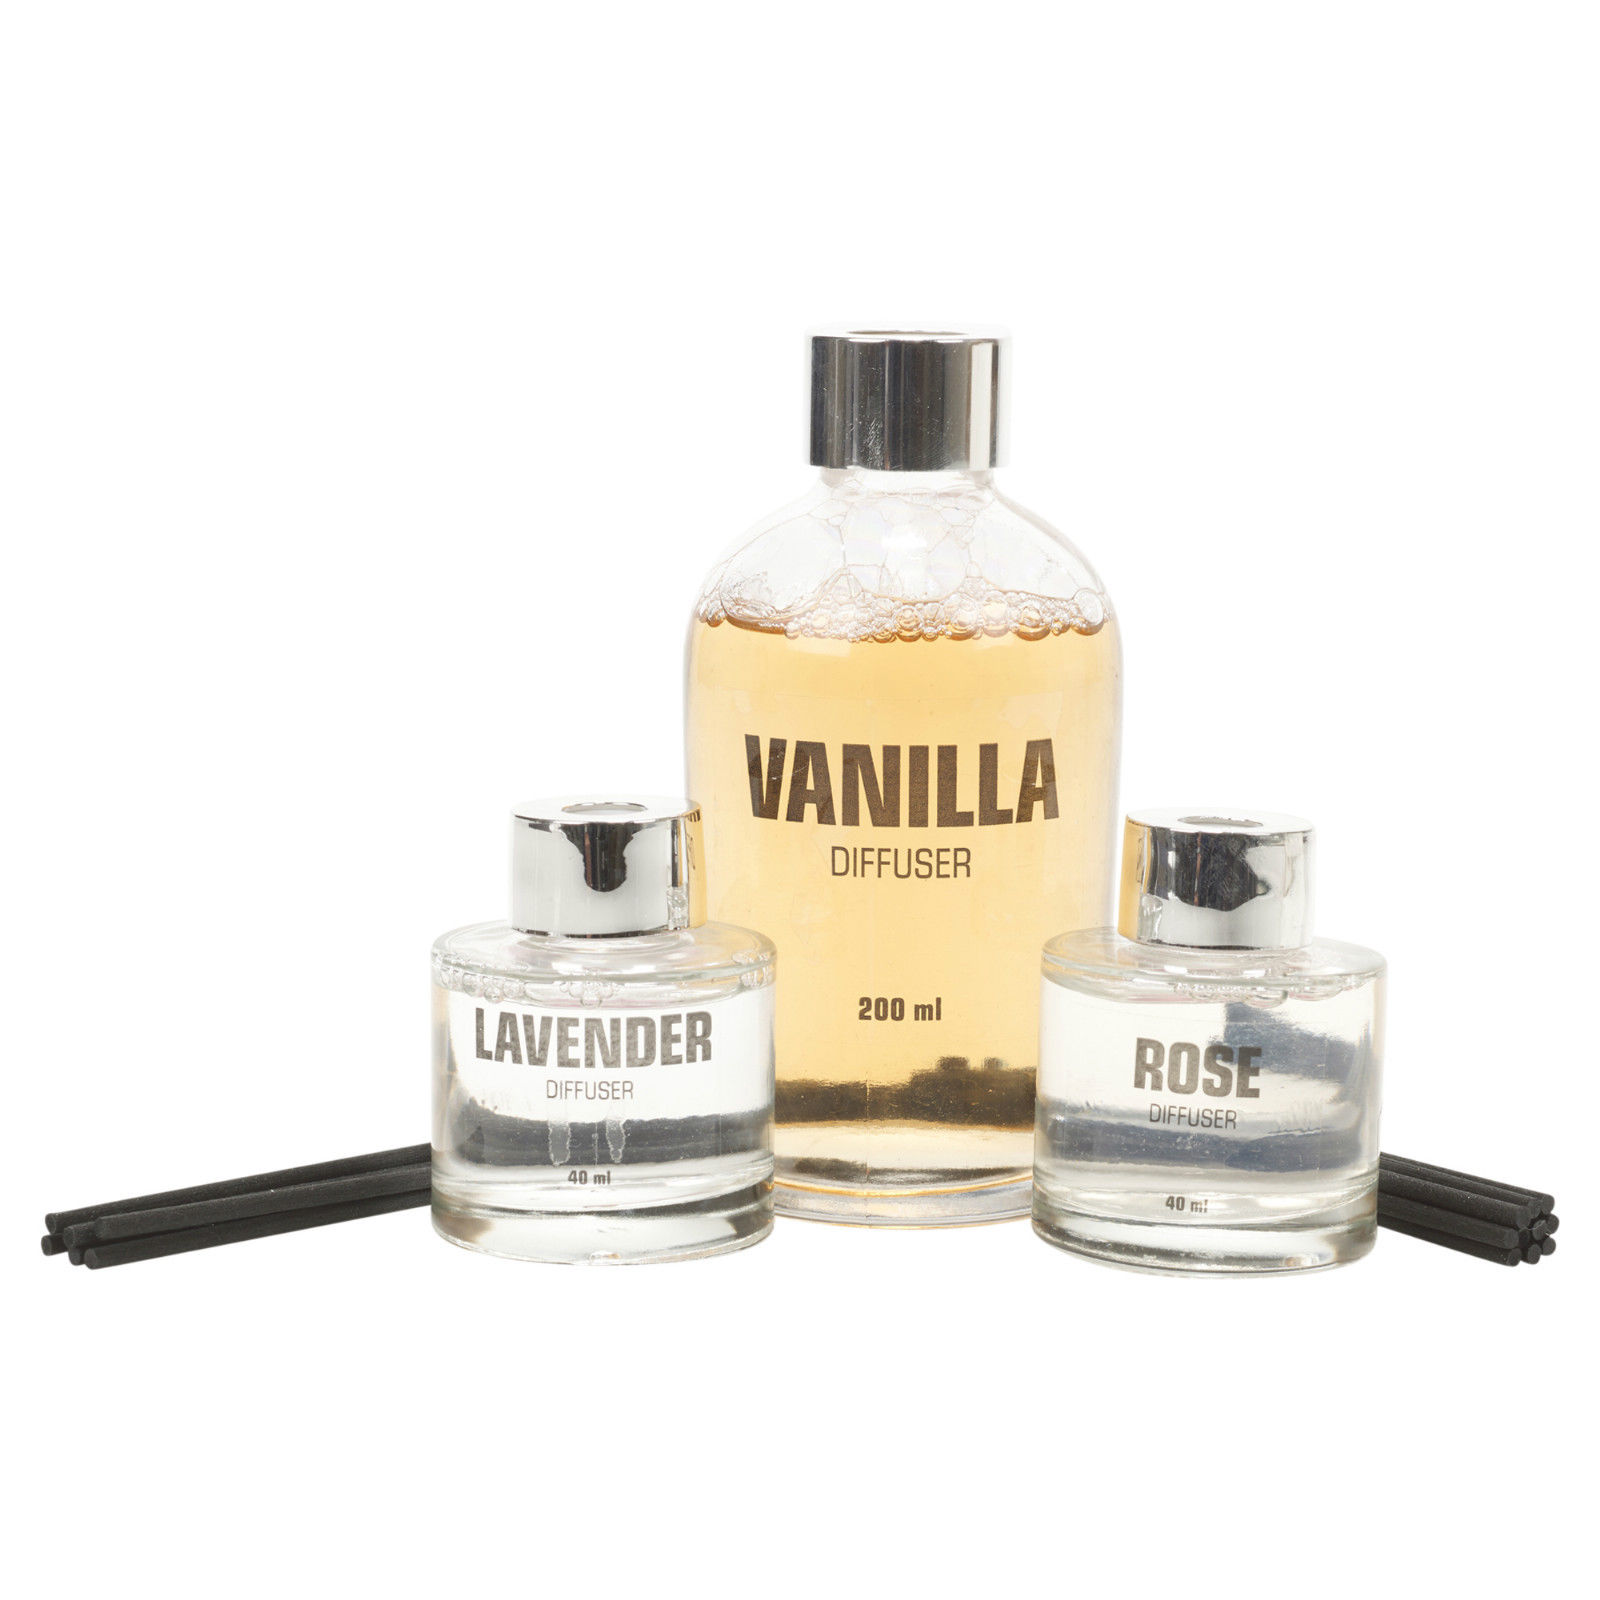 Fragrance Reed Diffuser Untuk Aromaterapi Gift Set 3 Scents wangi Home Air Freshener Aroma Diffuser New